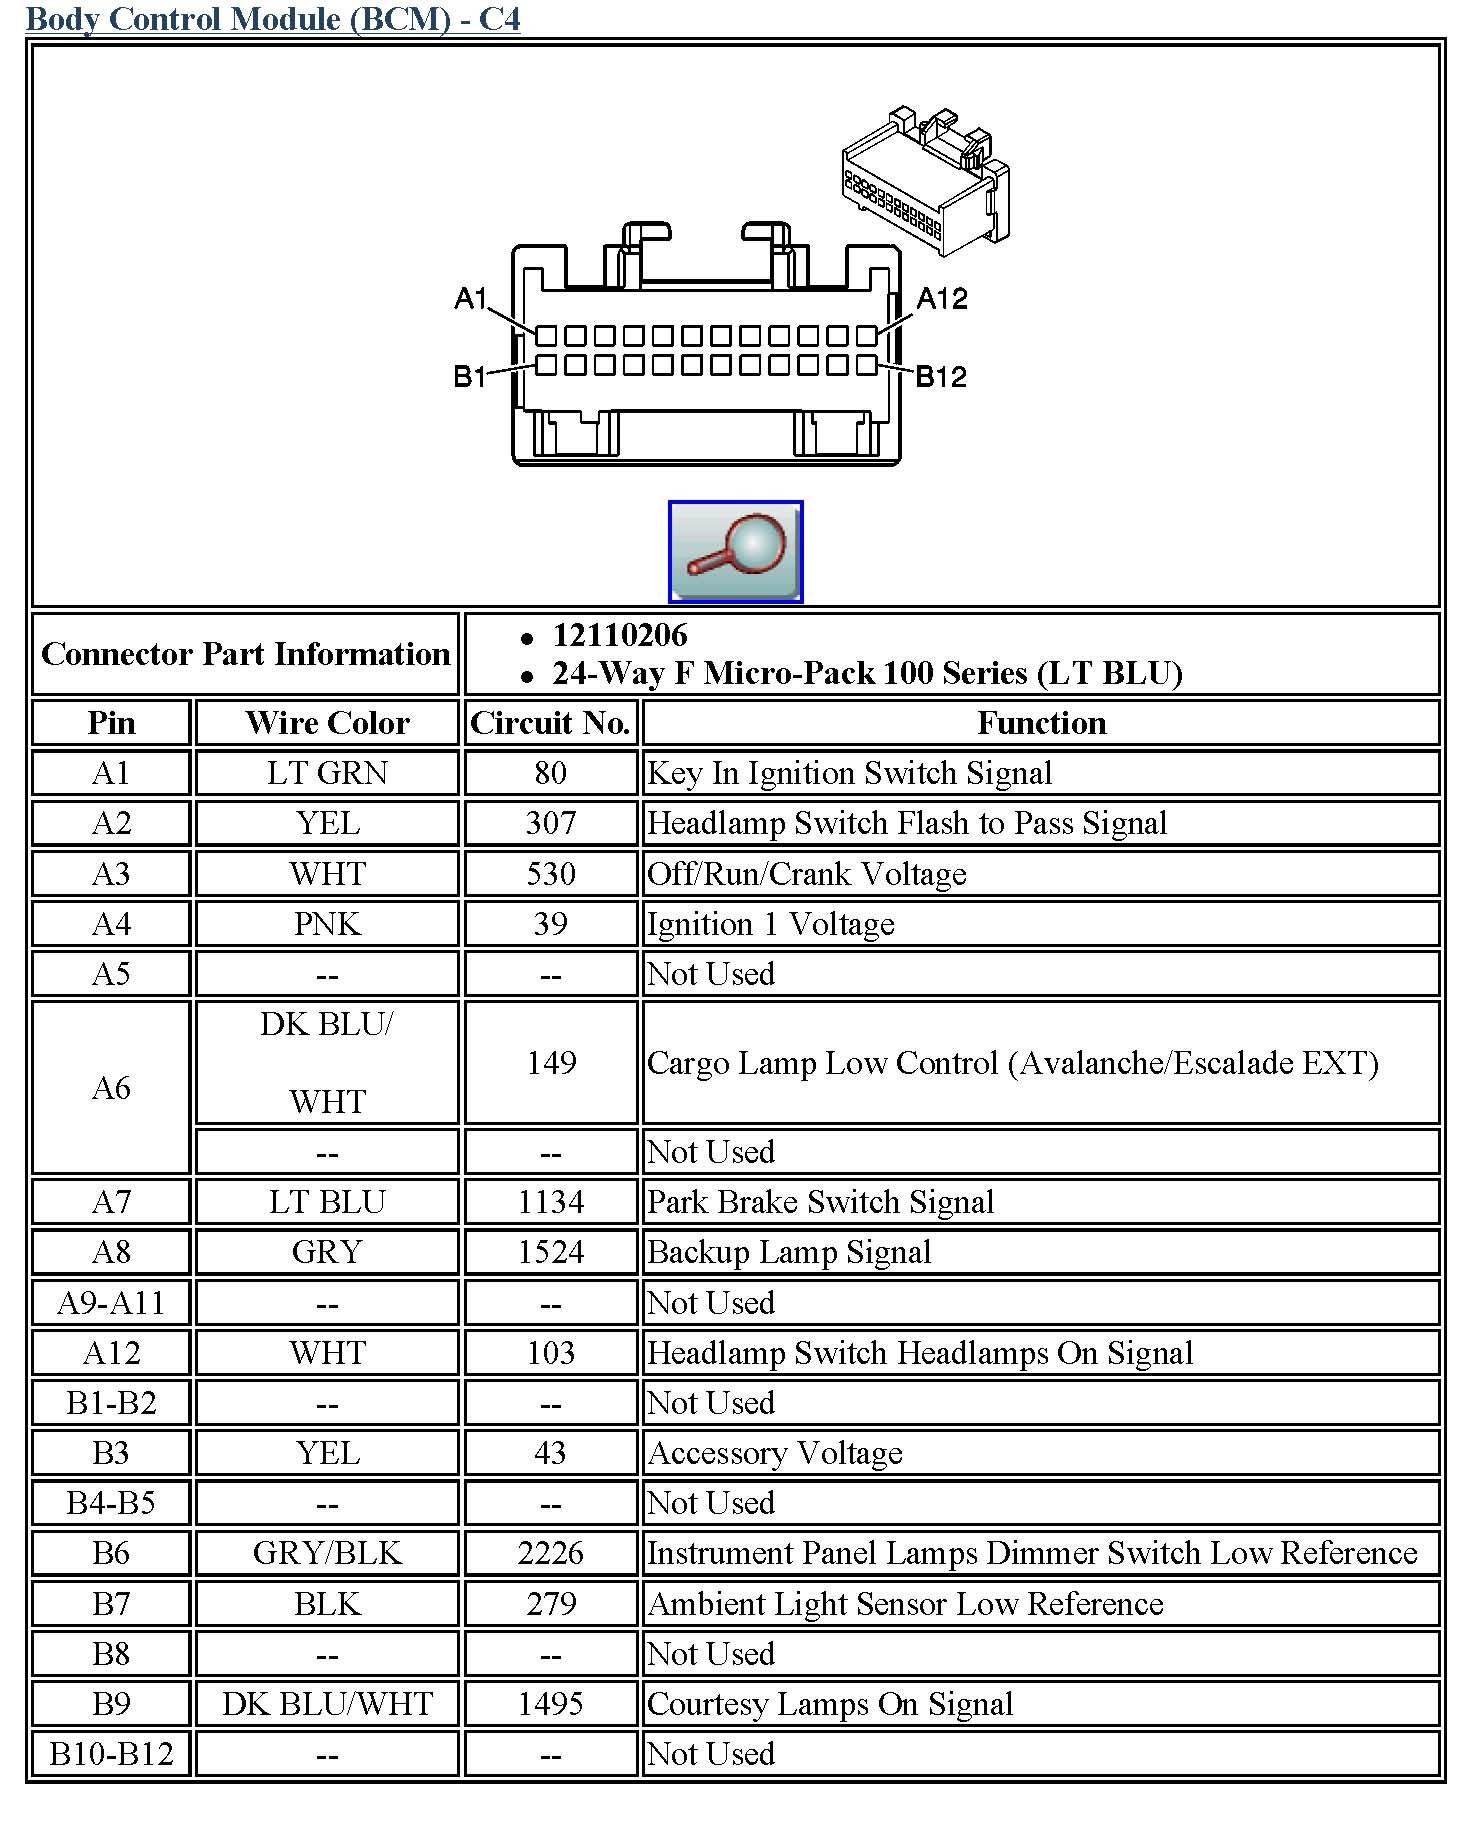 2004 Gmc Sierra 6.0 Tcm Wiring 2003 Gmc Engine Diagram Wiring Diagram Provider Provider Of 2004 Gmc Sierra 6.0 Tcm Wiring